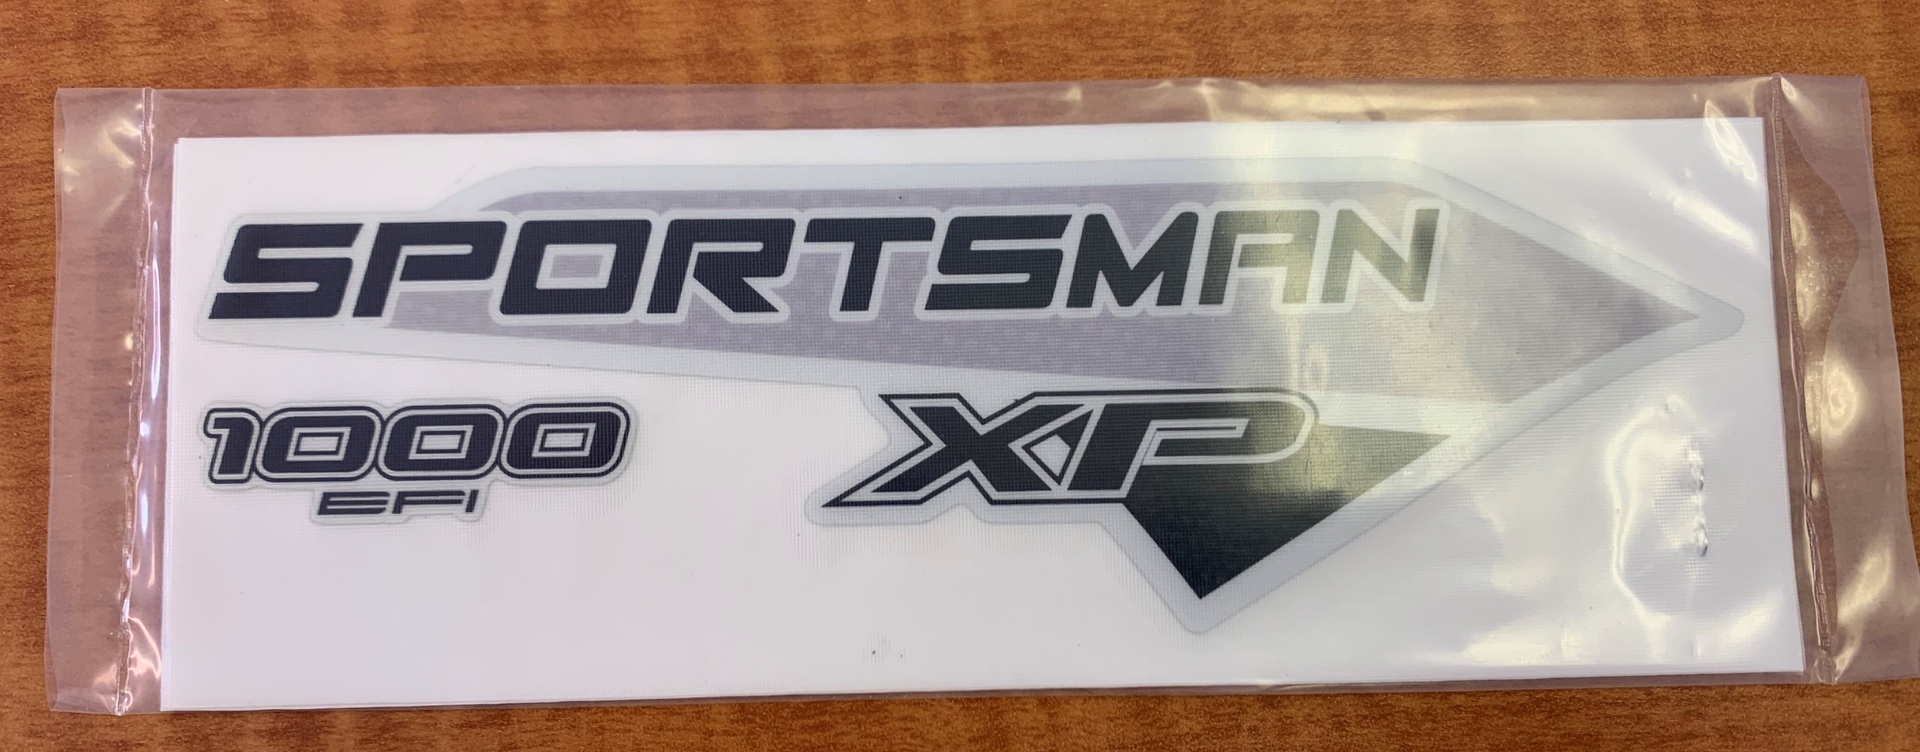 [ST-5500-1000-S] Stickers Polaris Sportsman 1000 XP EFI (ST-5500-1000-S)